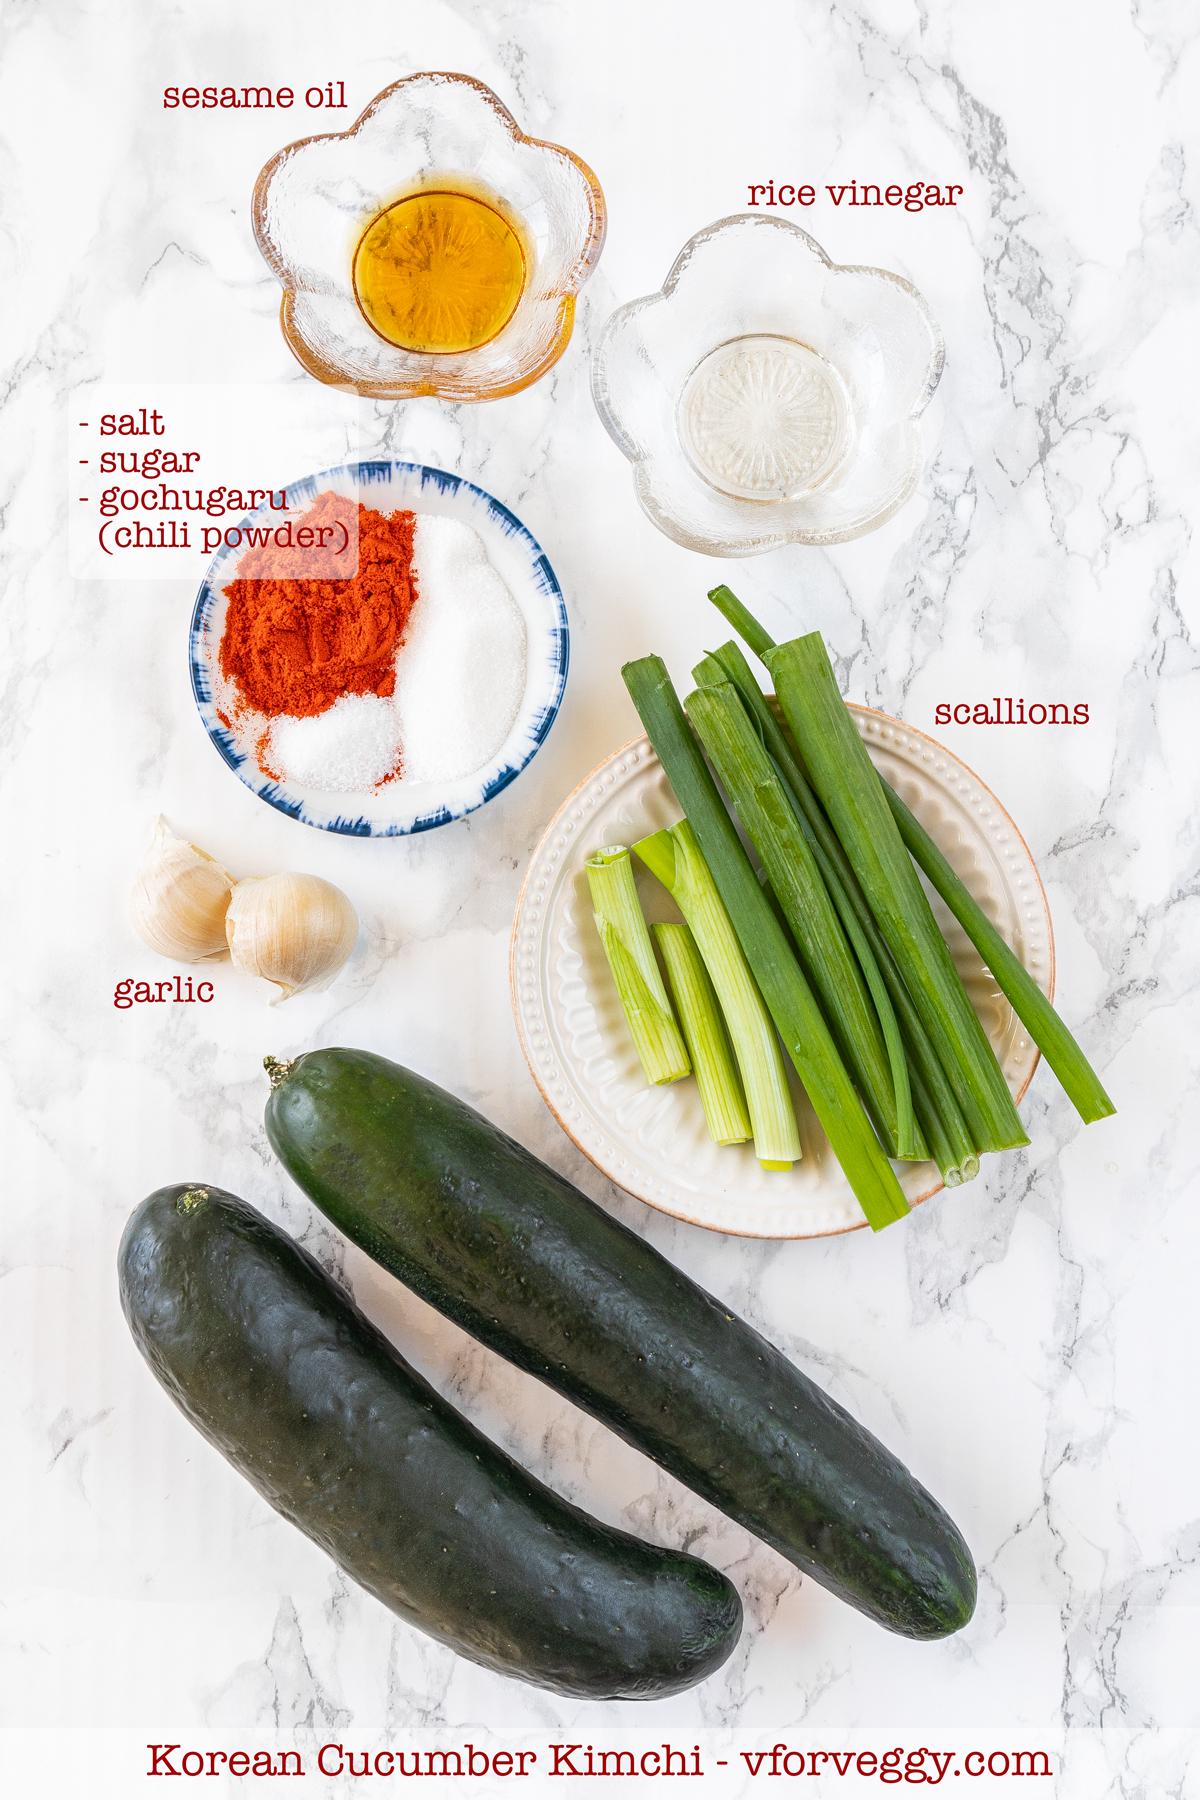 Ingredients for Korean cucumber kimchi: cucumber, garlic, scallion, gochugaru, sugar, salt, rice vinegar, and sesame oil.